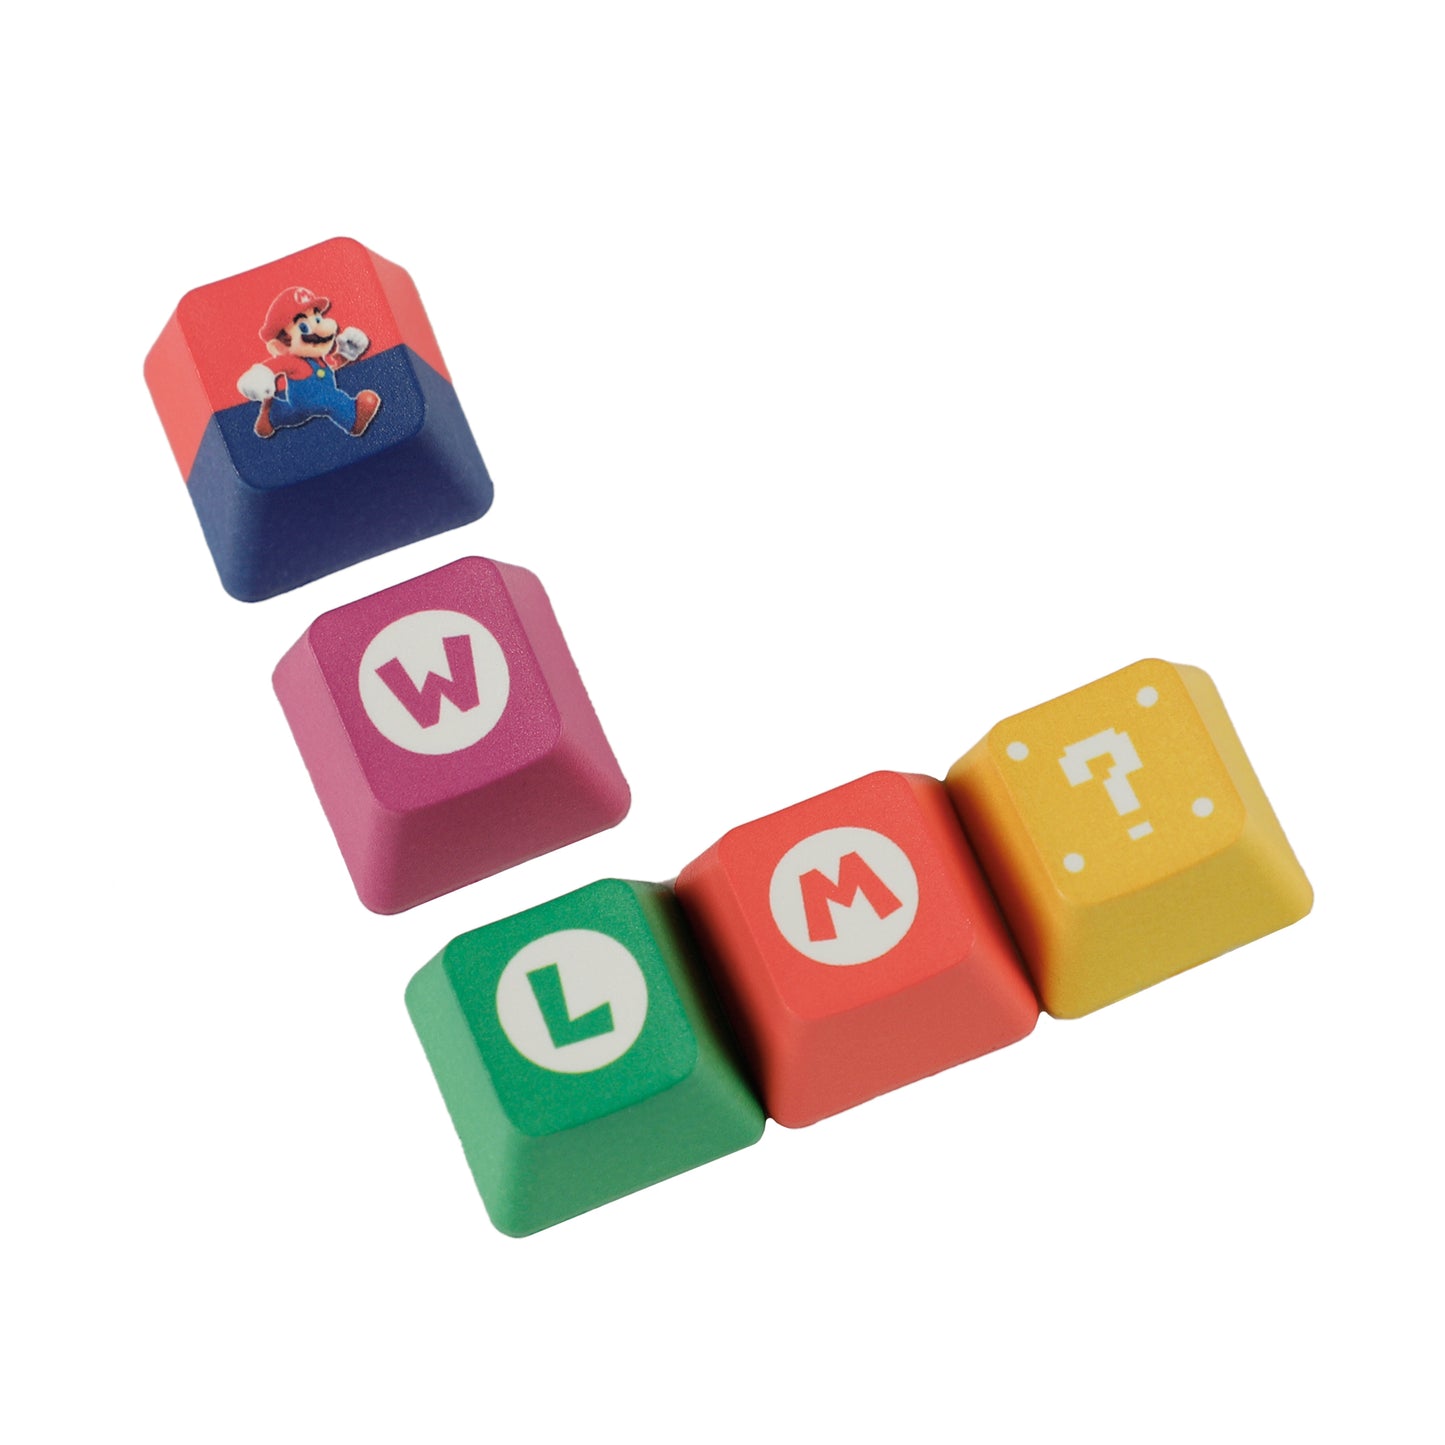 Pacman Theme or Mario Theme OEM Profile keycaps(Five Dye PBT Custom Sublimation )